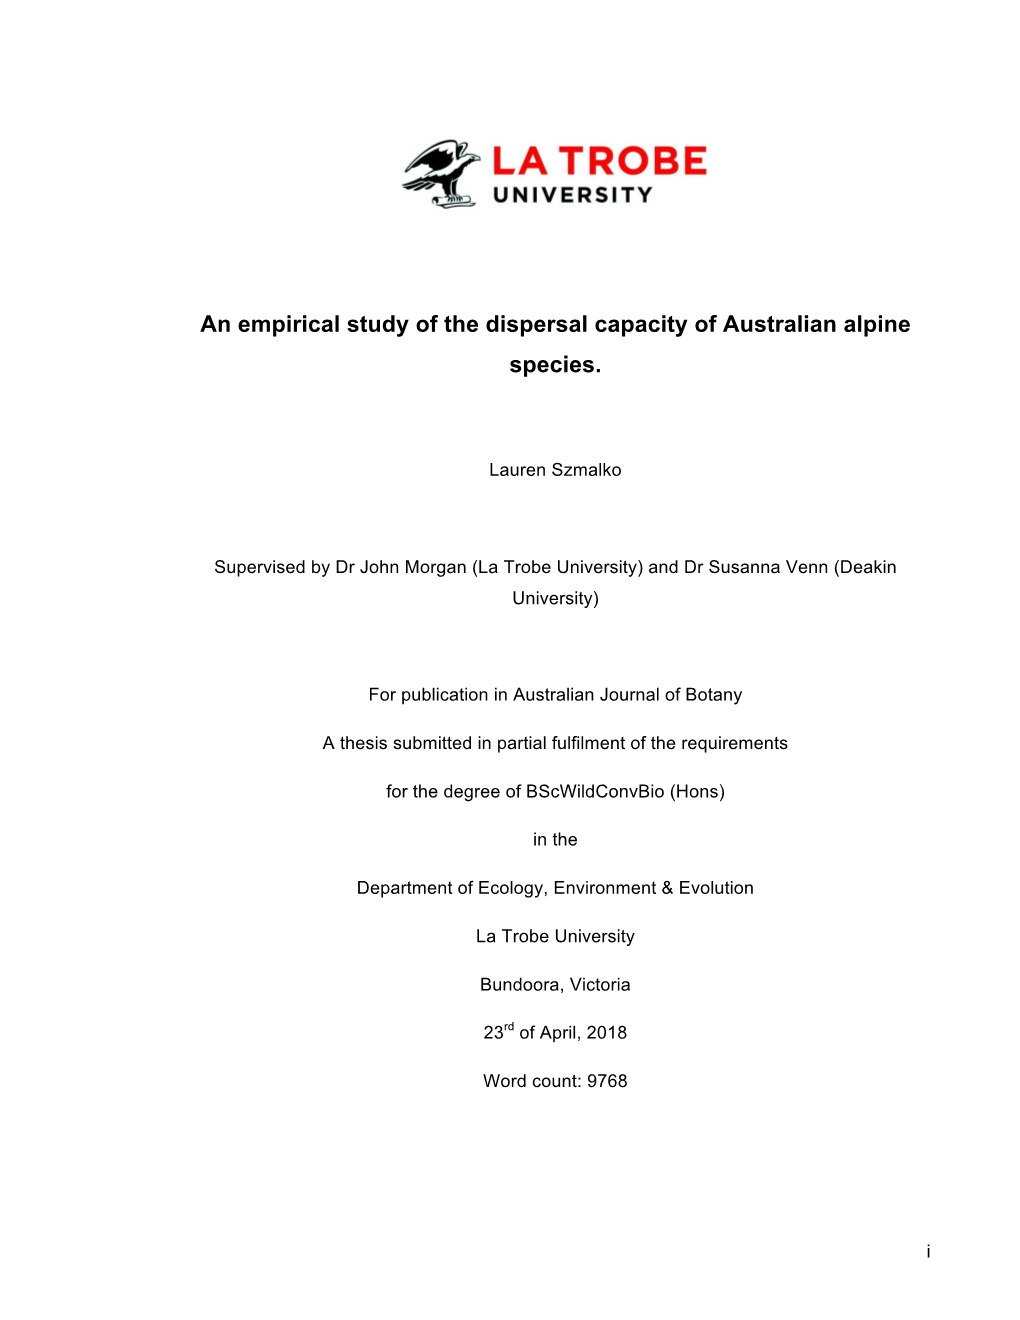 An Empirical Study of the Dispersal Capacity of Australian Alpine Species